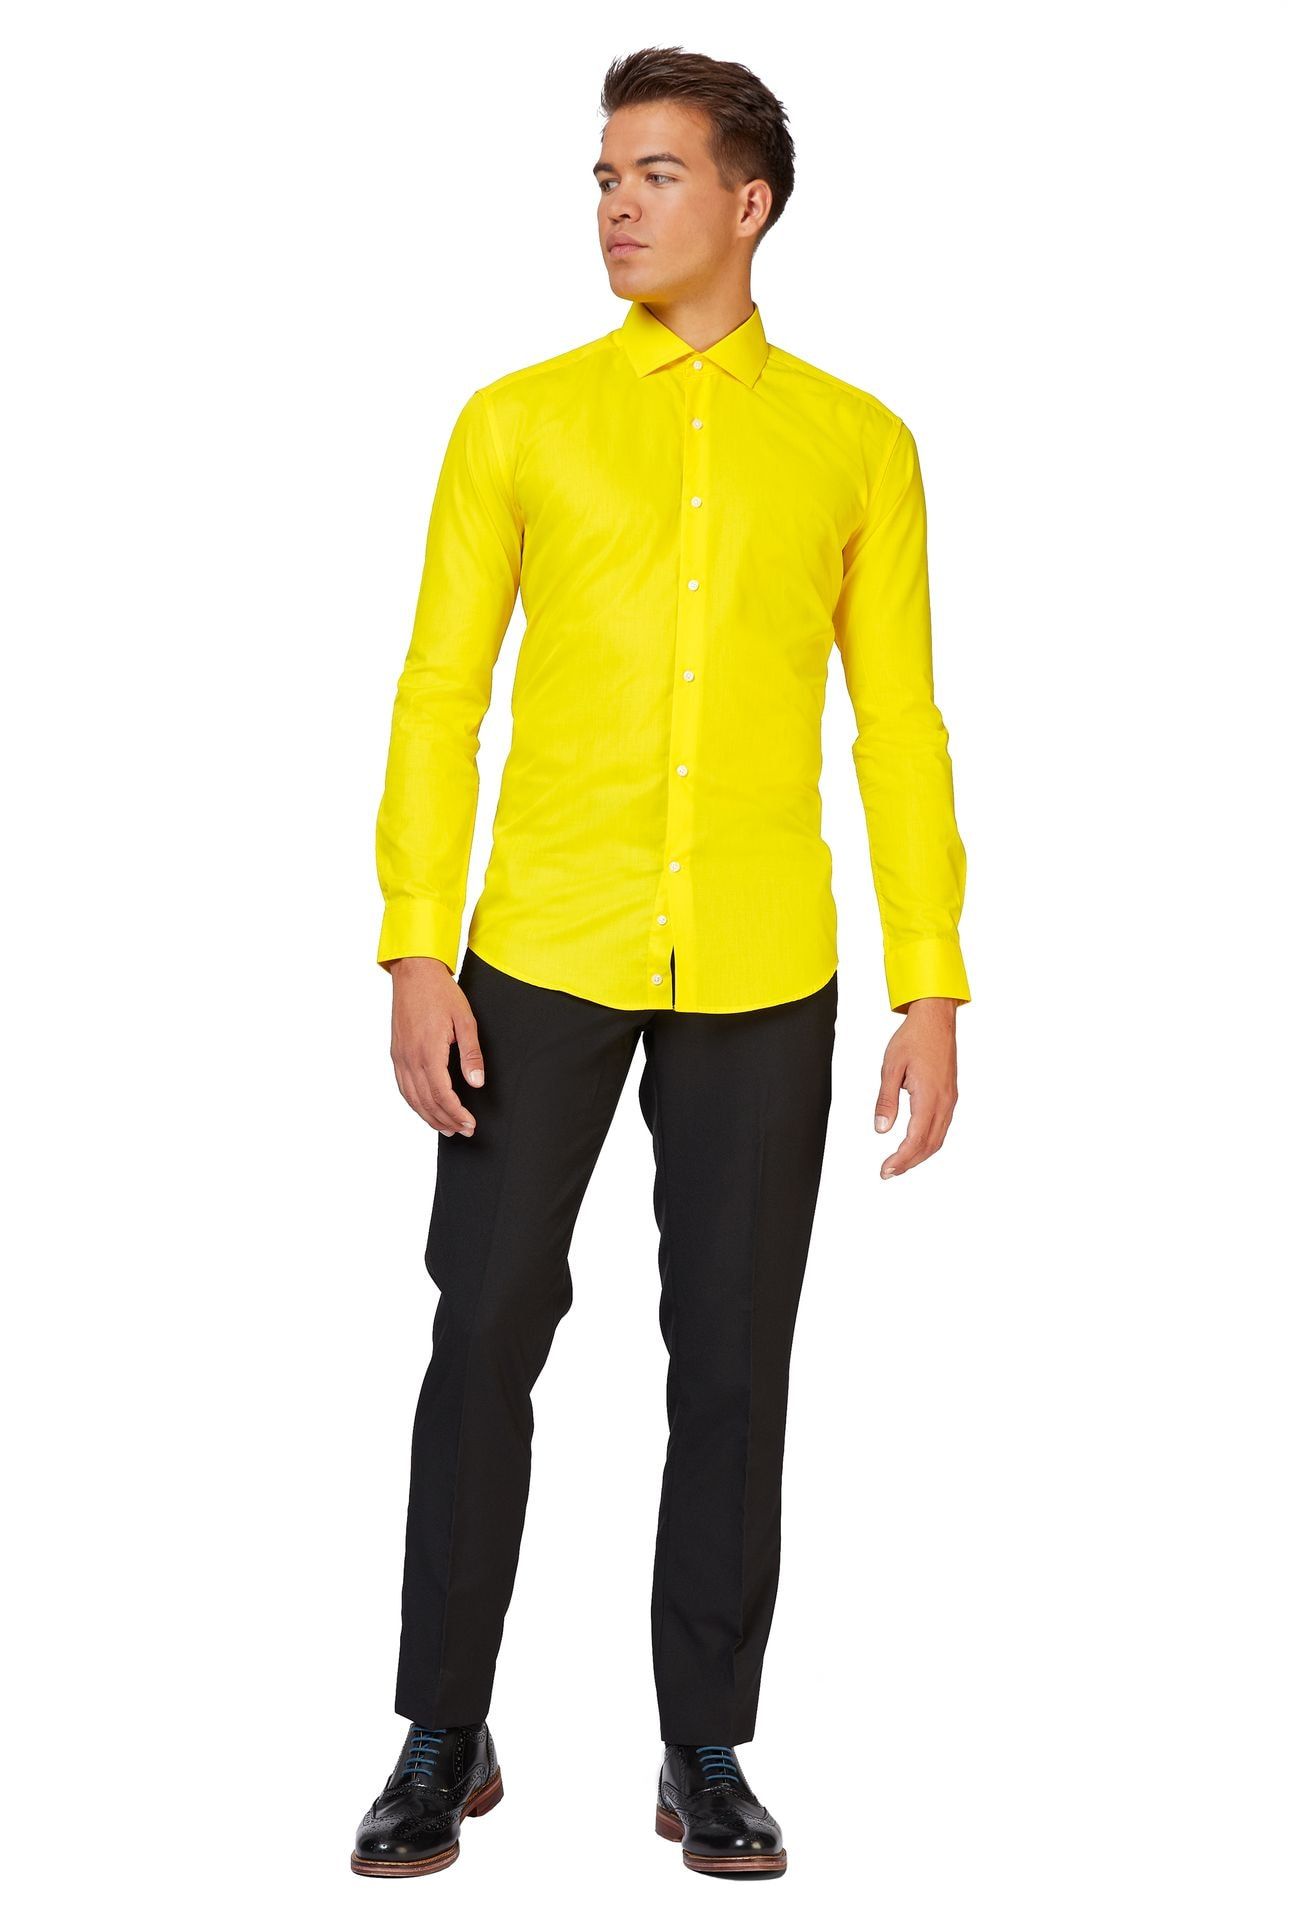 Opposuits Yellow fellow blouse